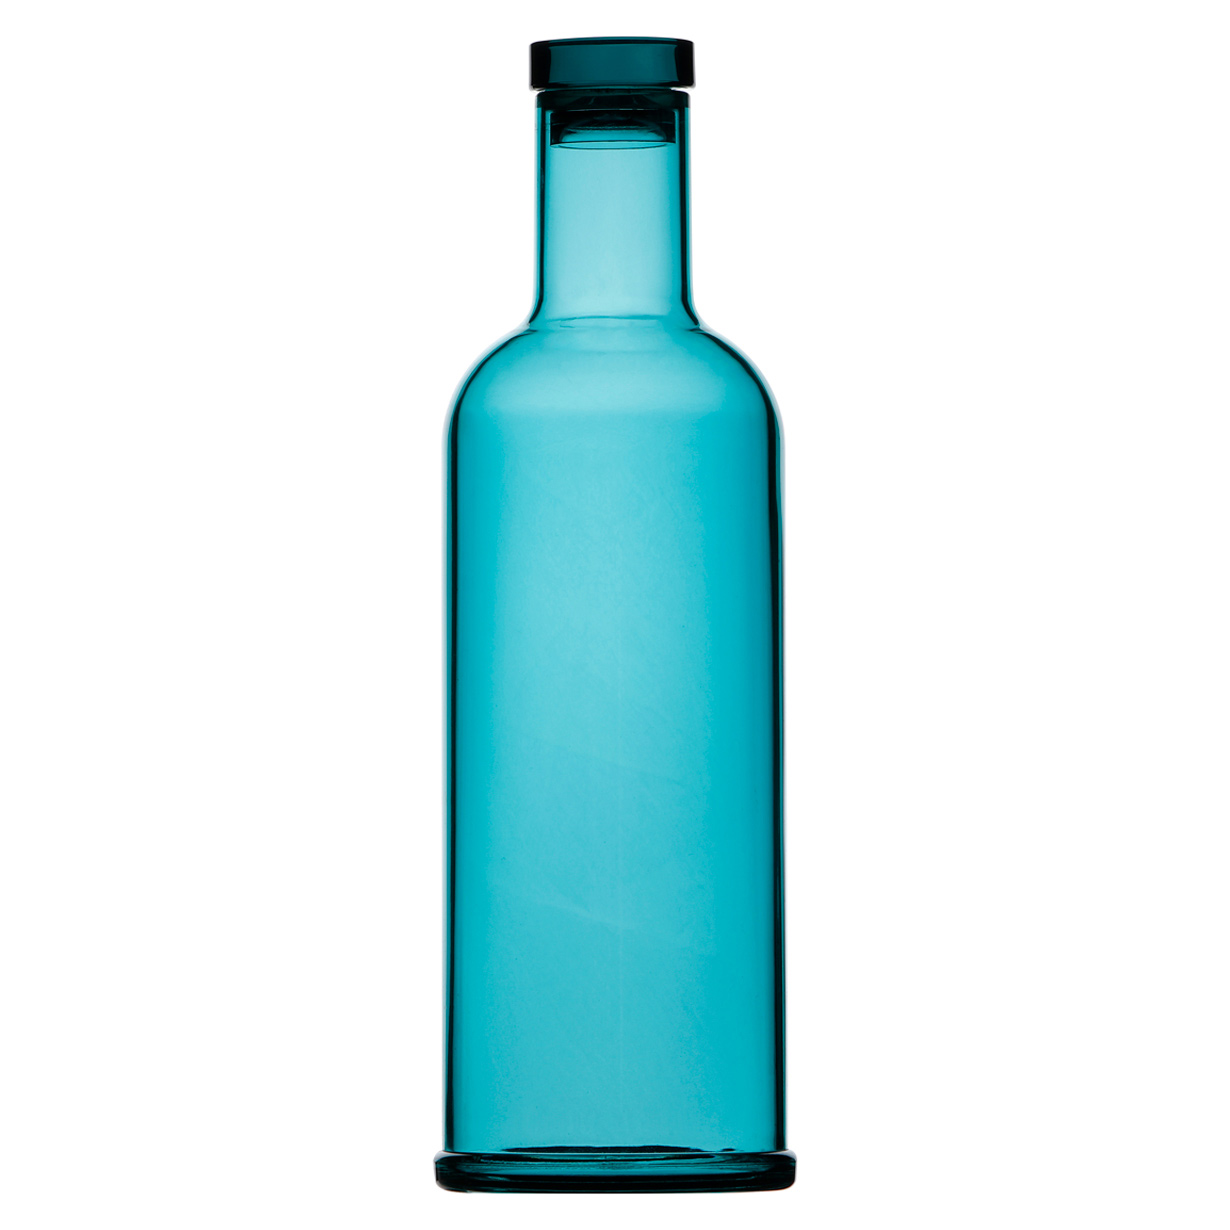 Botellas térmicas – Botellas Aquaservice